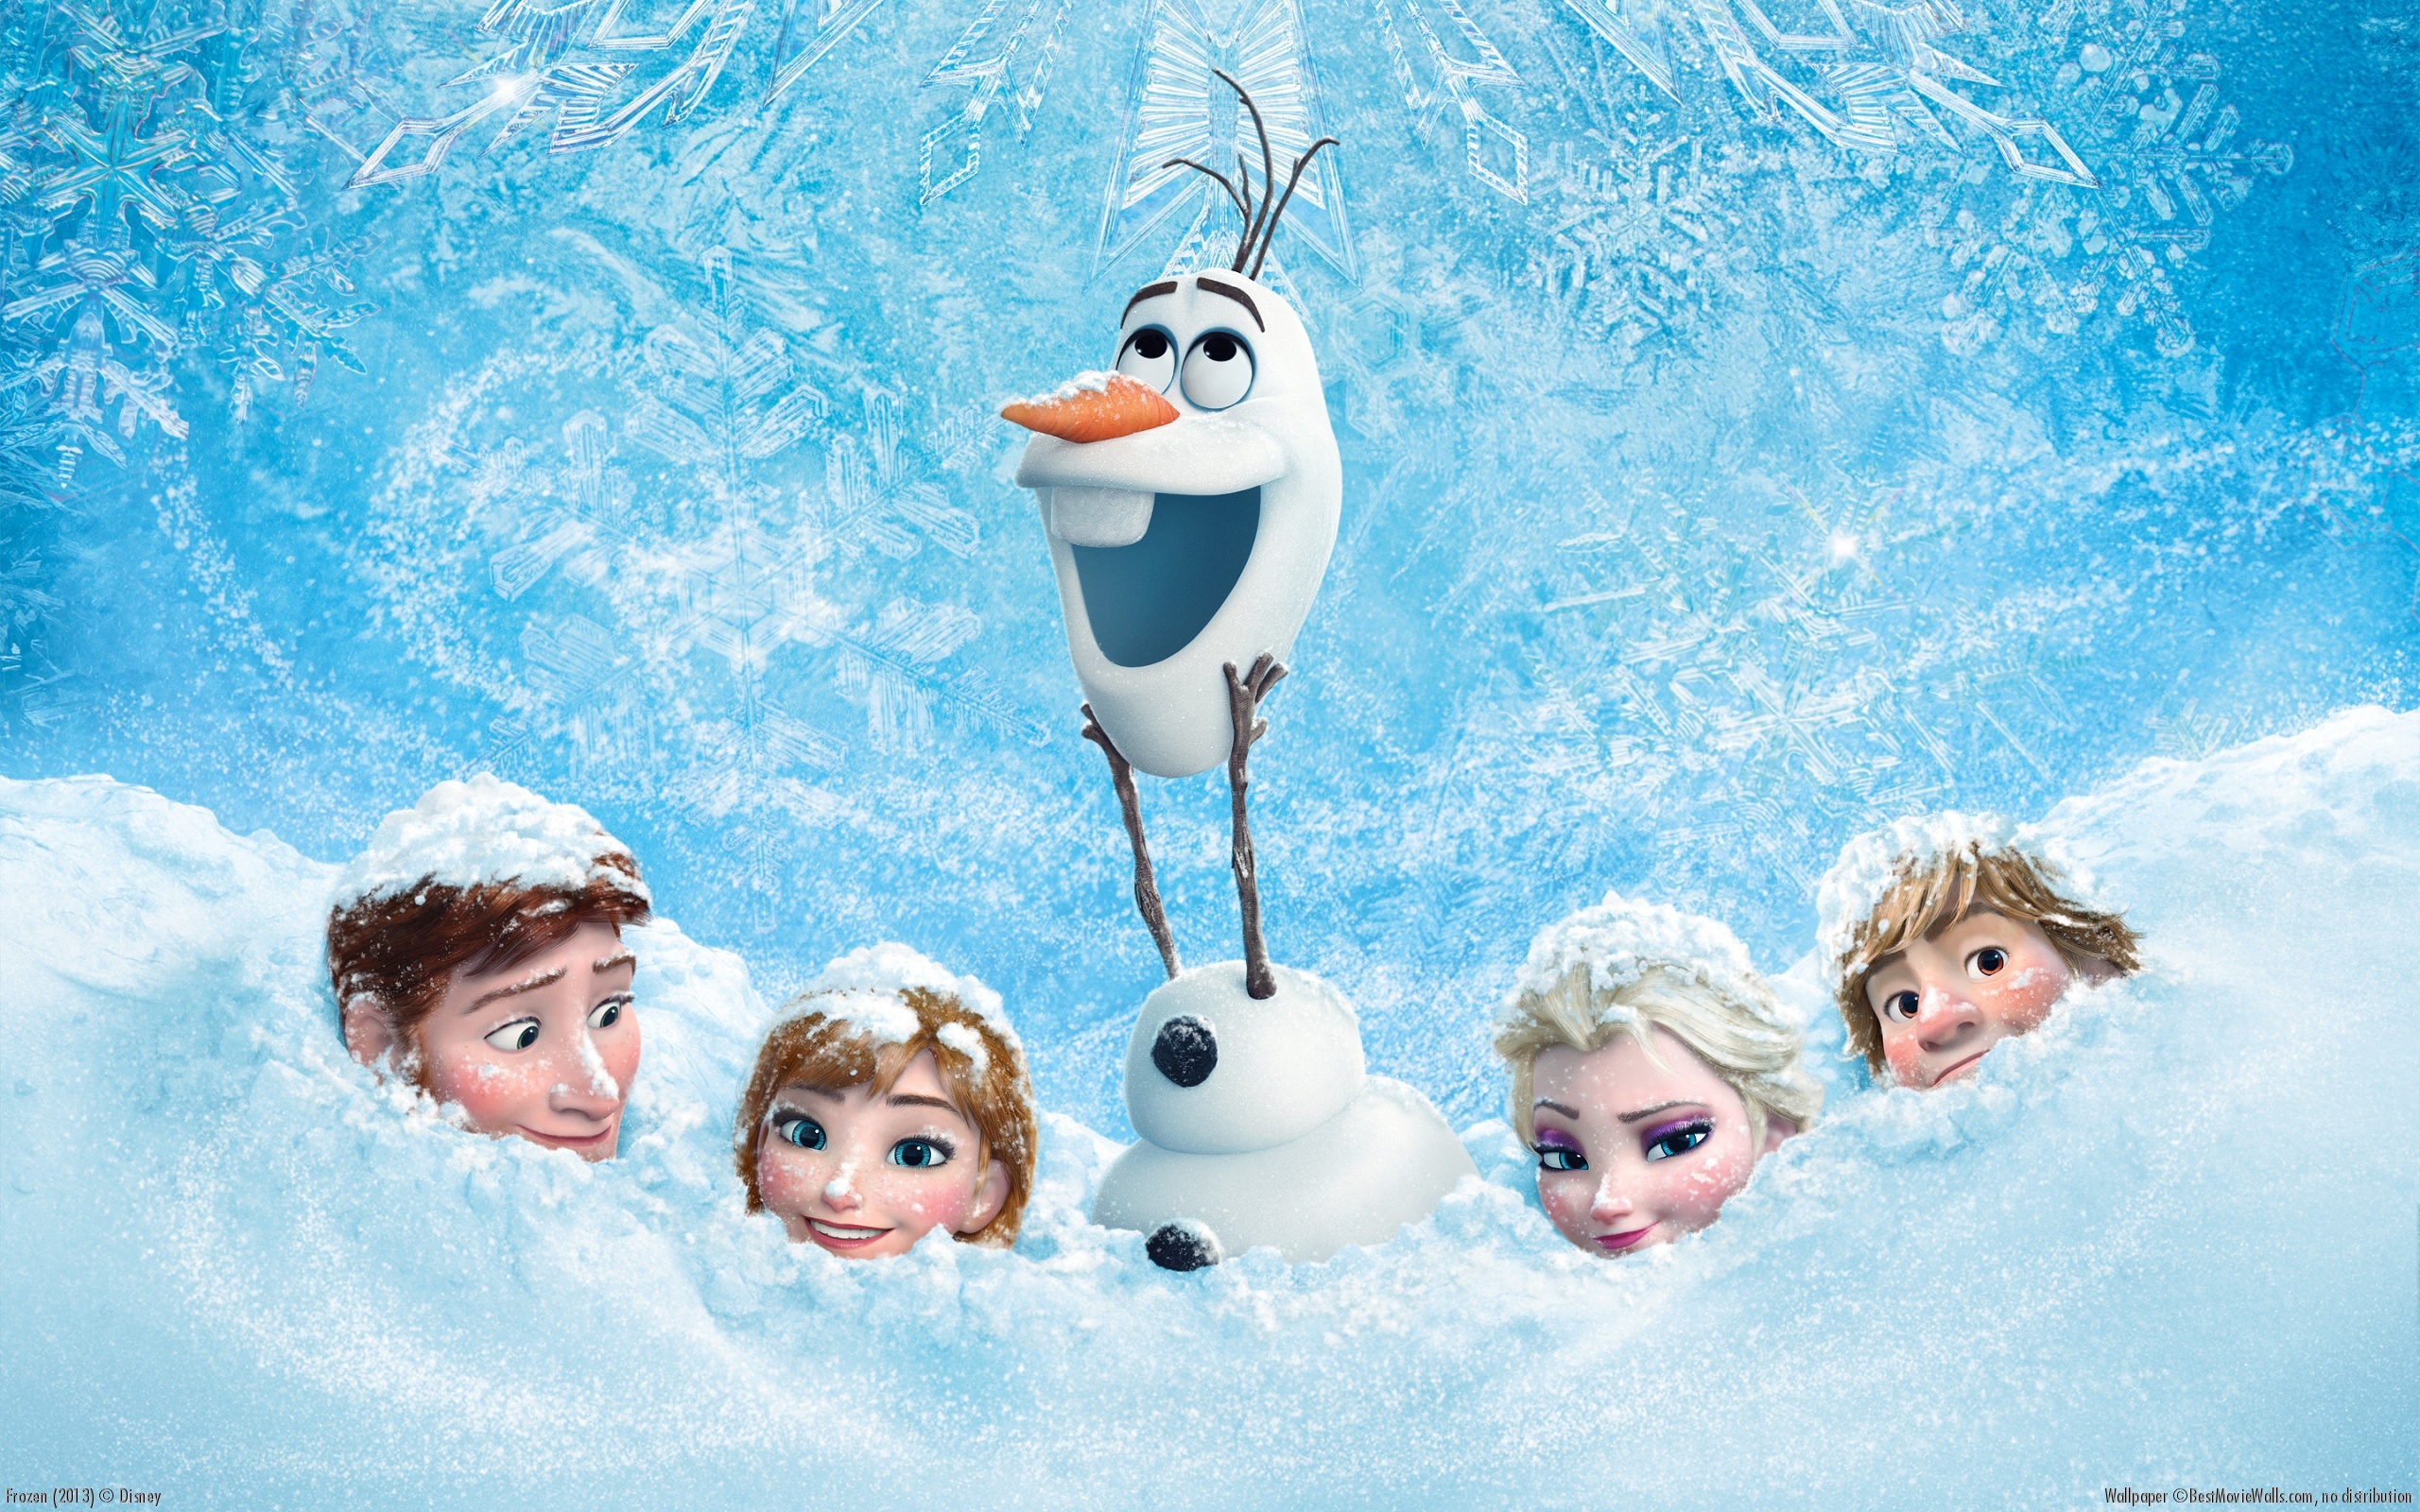 5 Snowflakes for Frozen - The Nicene Nerd